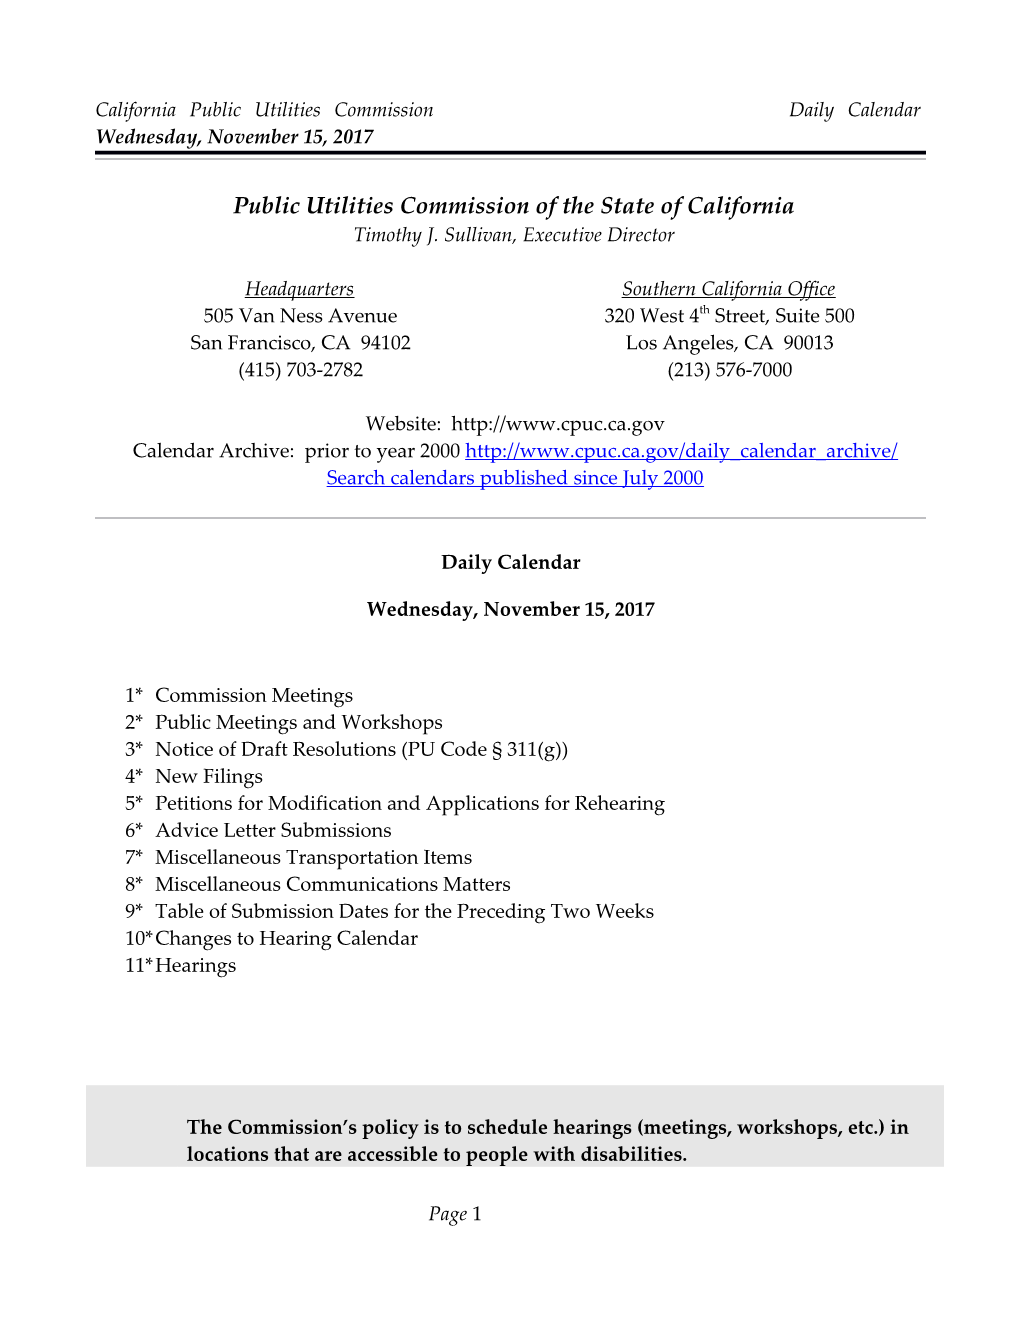 California Public Utilities Commission Daily Calendar Wednesday, November 15, 2017